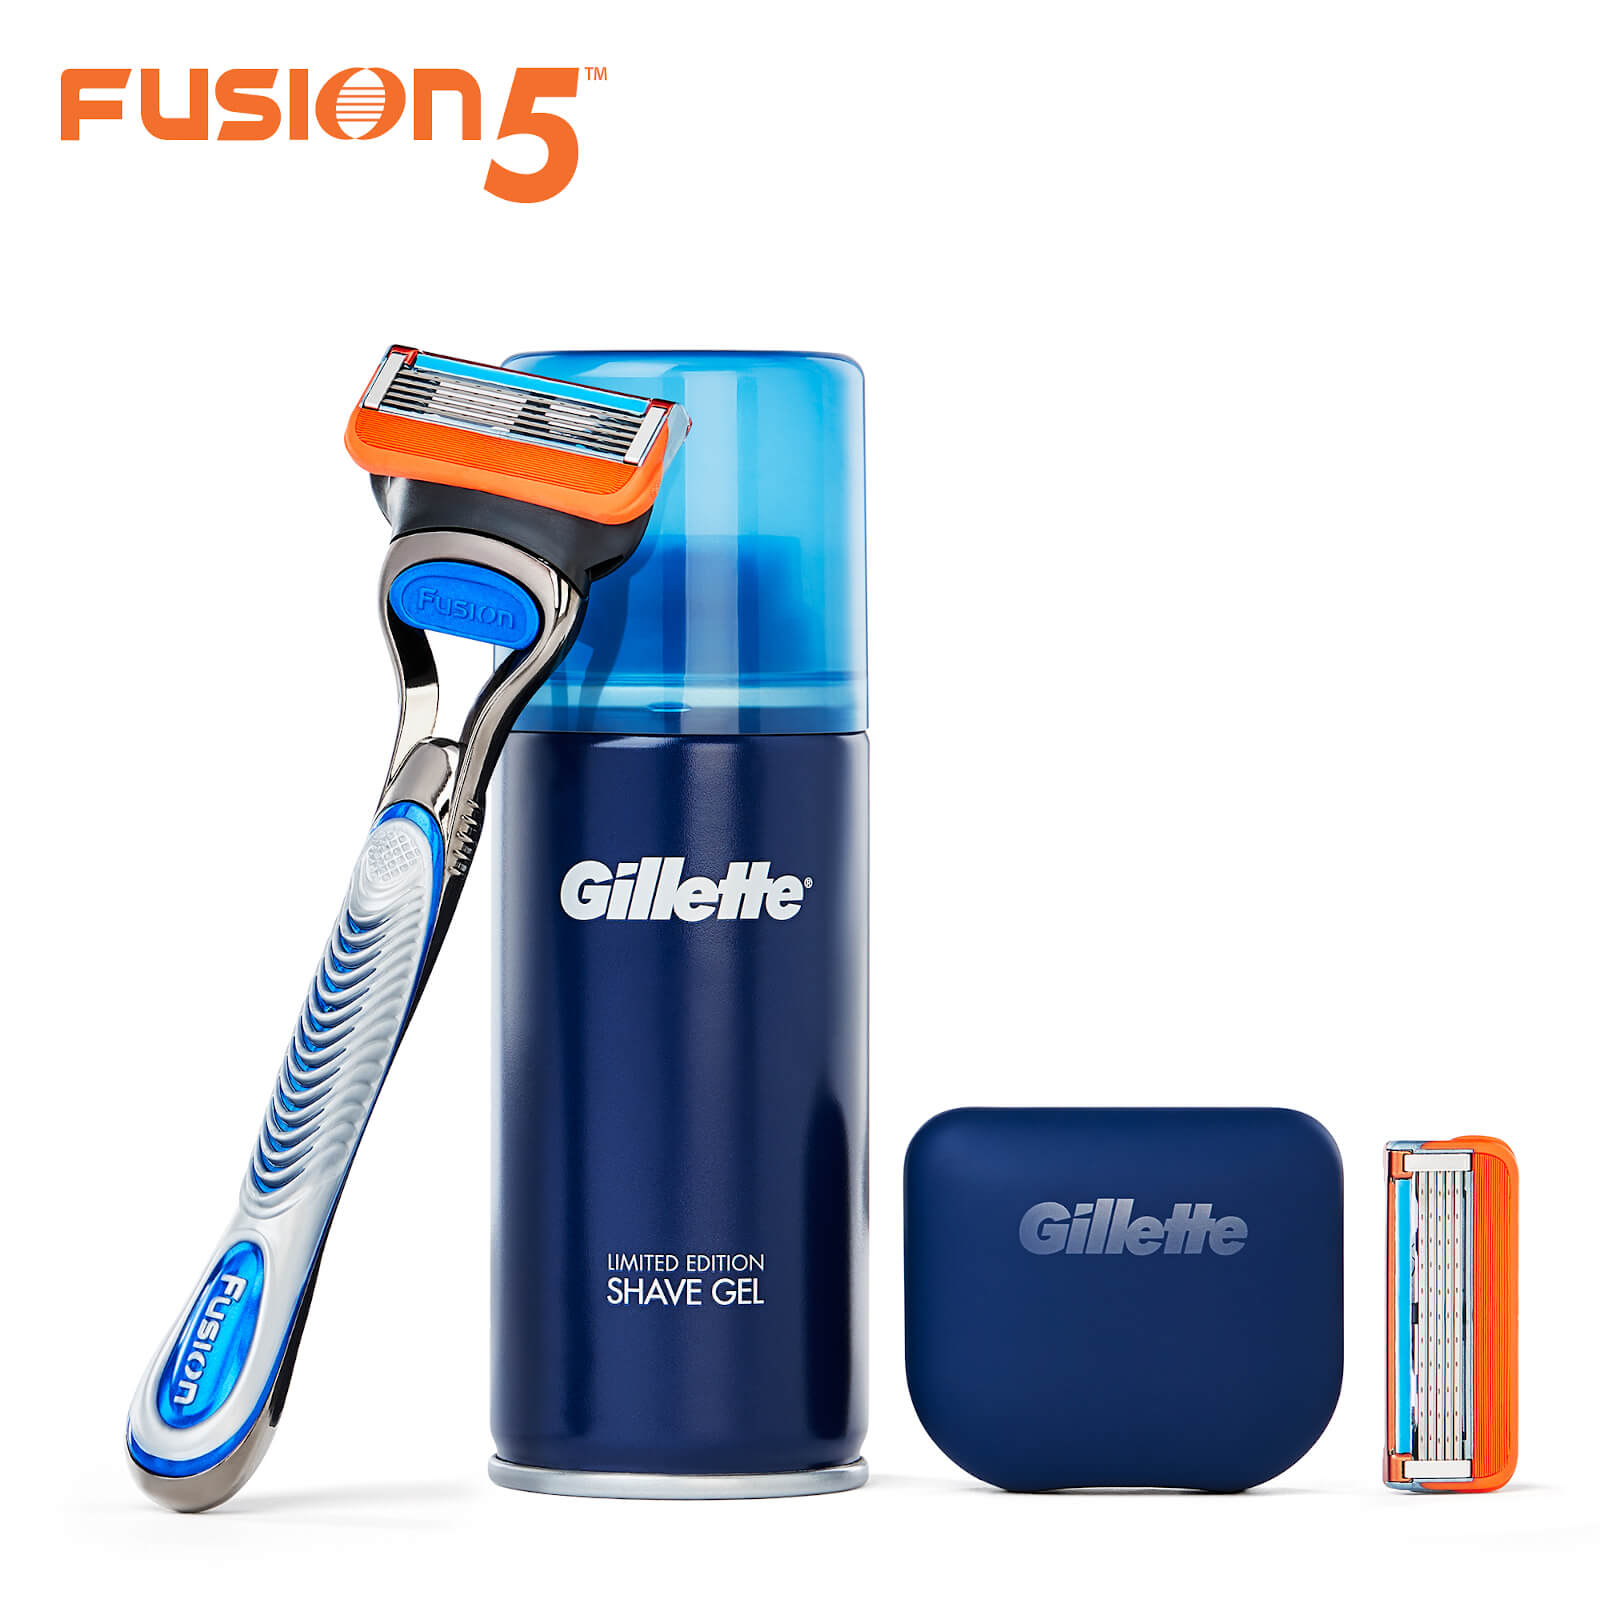 Gillette Fusion5 Starter Kit Subscription - Trial 2 - 3 Month Plan